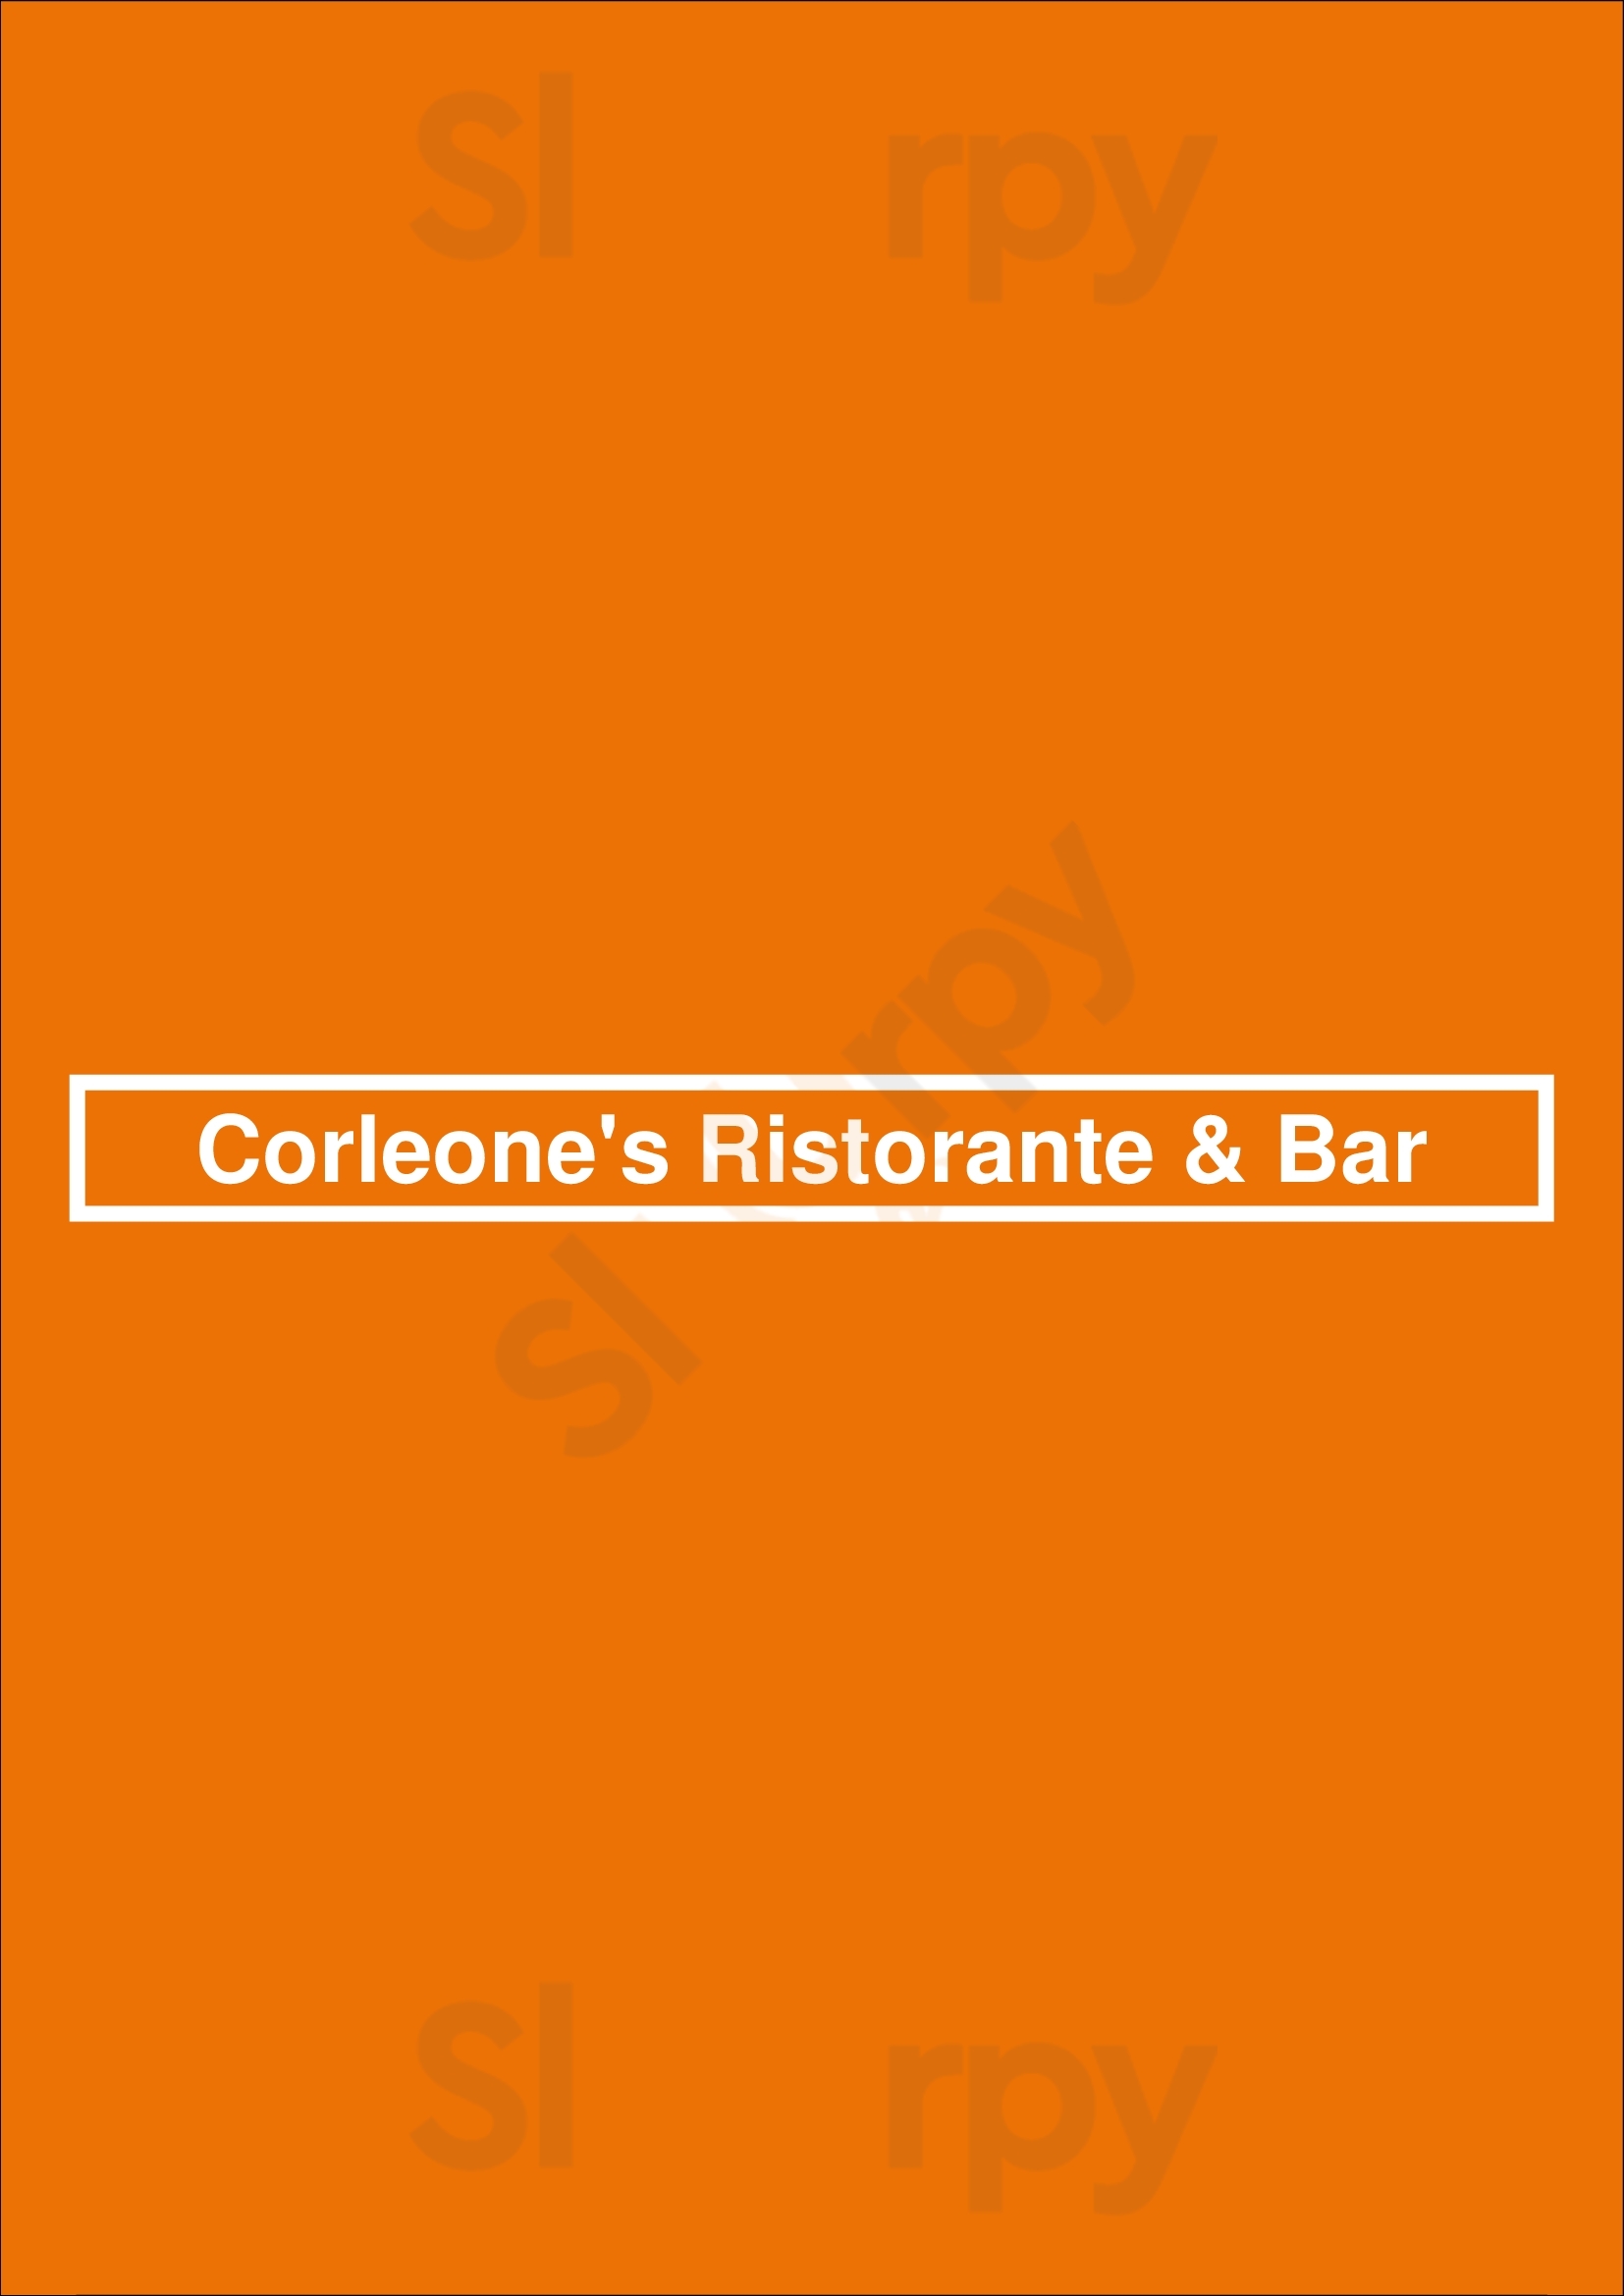 Corleone's Ristorante & Bar Cleveland Menu - 1